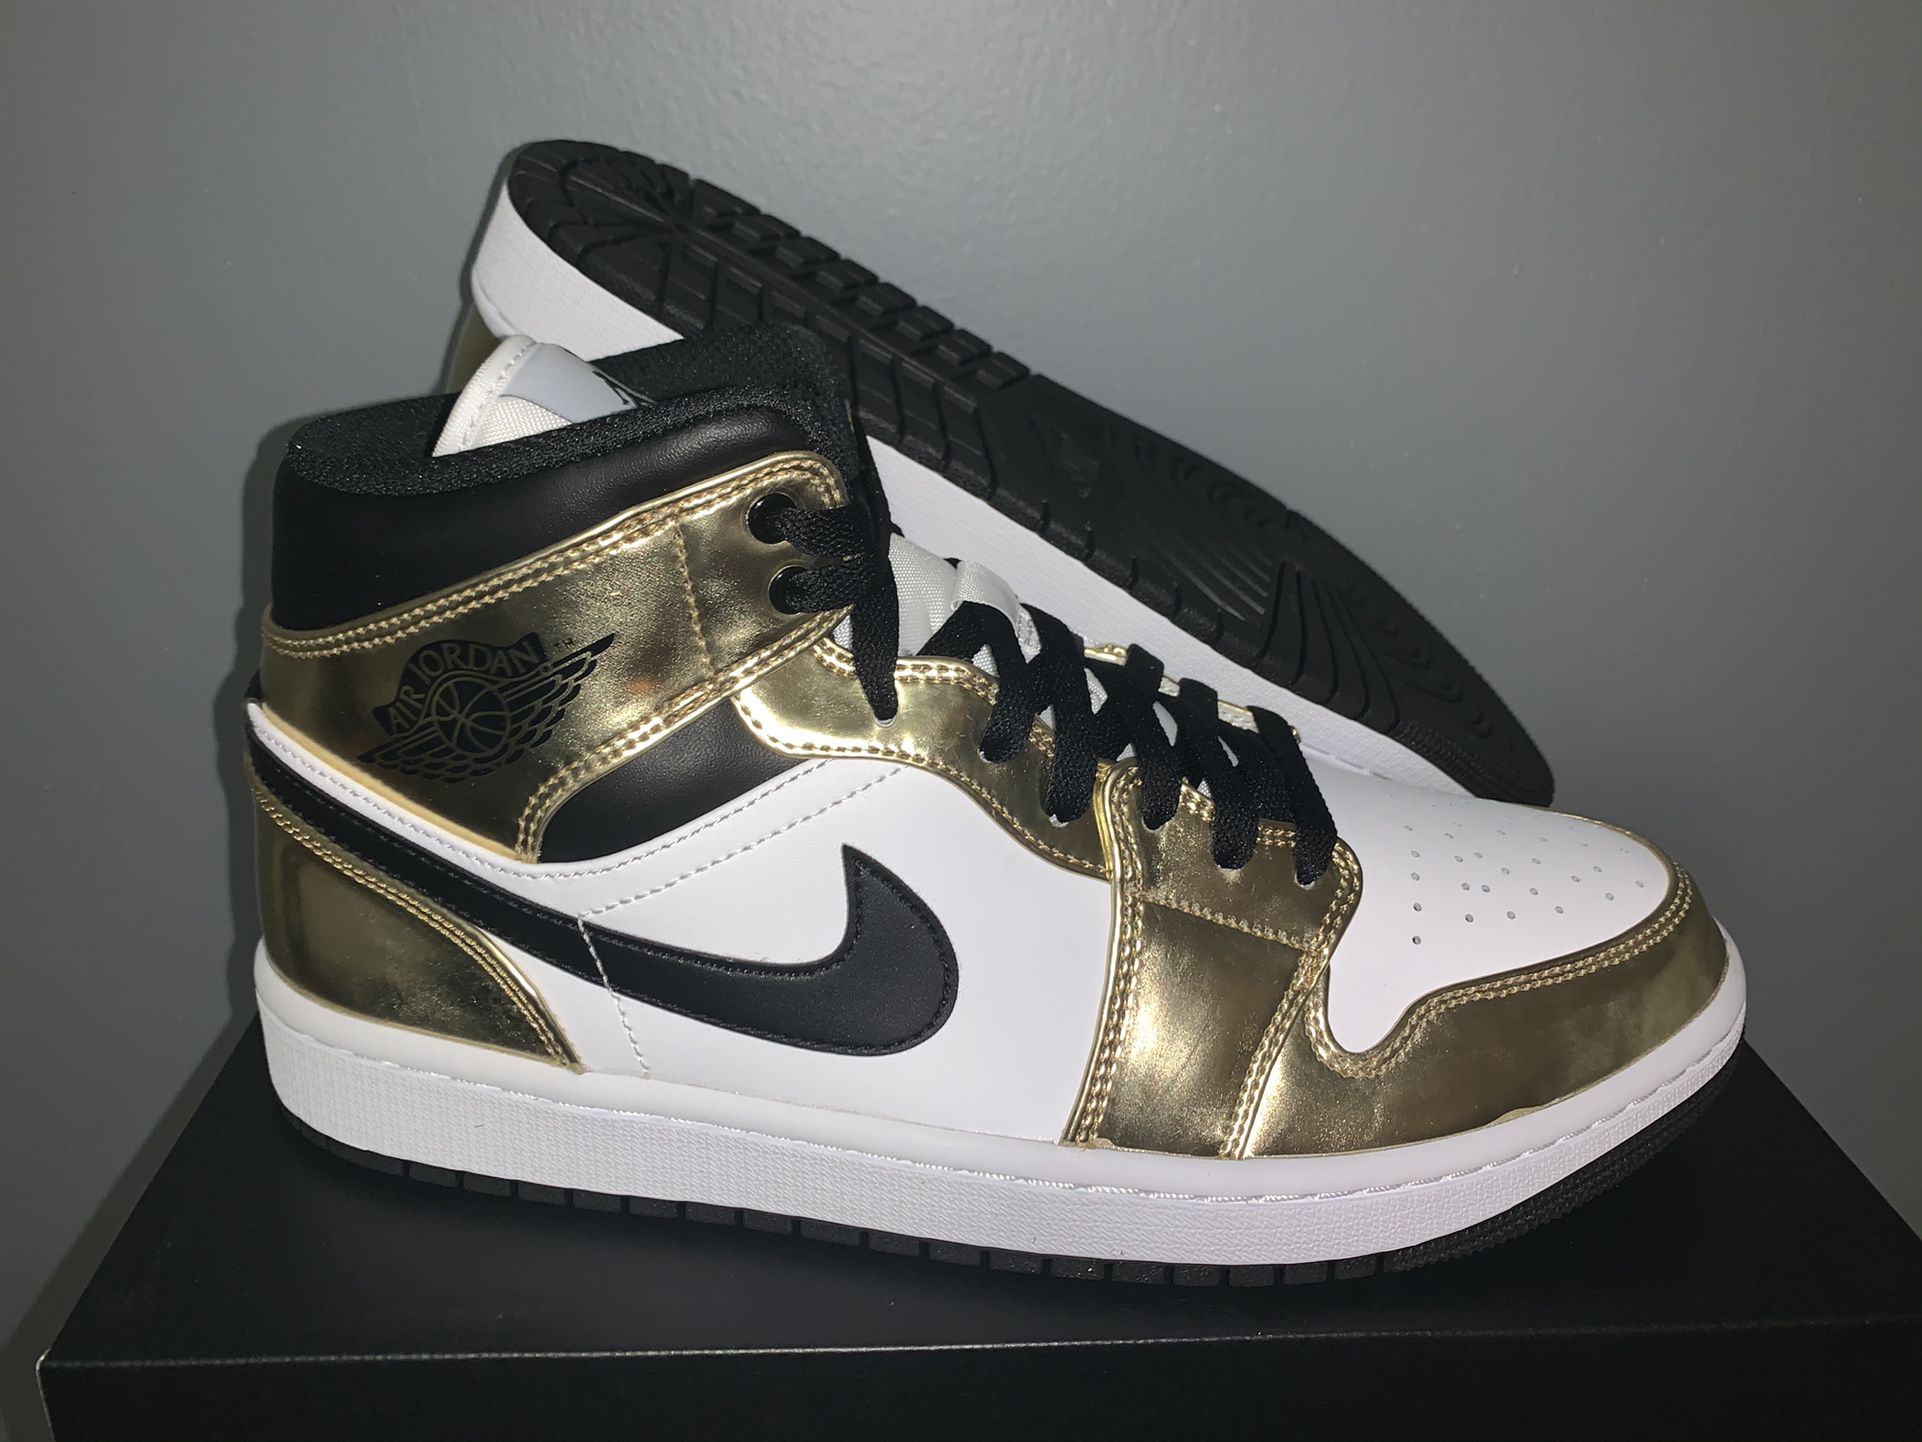 Jordan 1 Gold size 9 $150